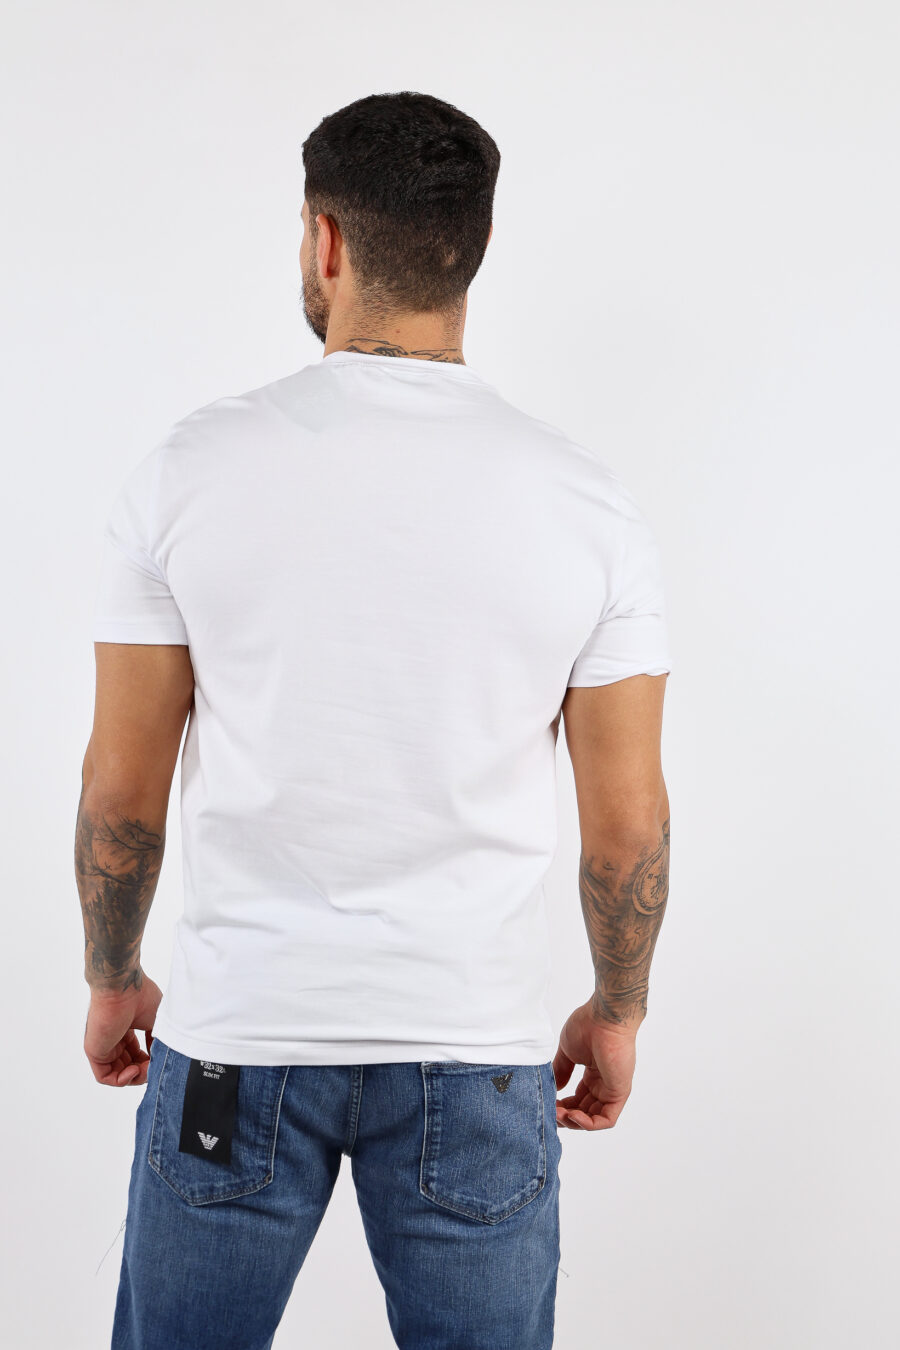 Camiseta blanca con maxilogo "lux identity" plateado neón - BLS Fashion 23